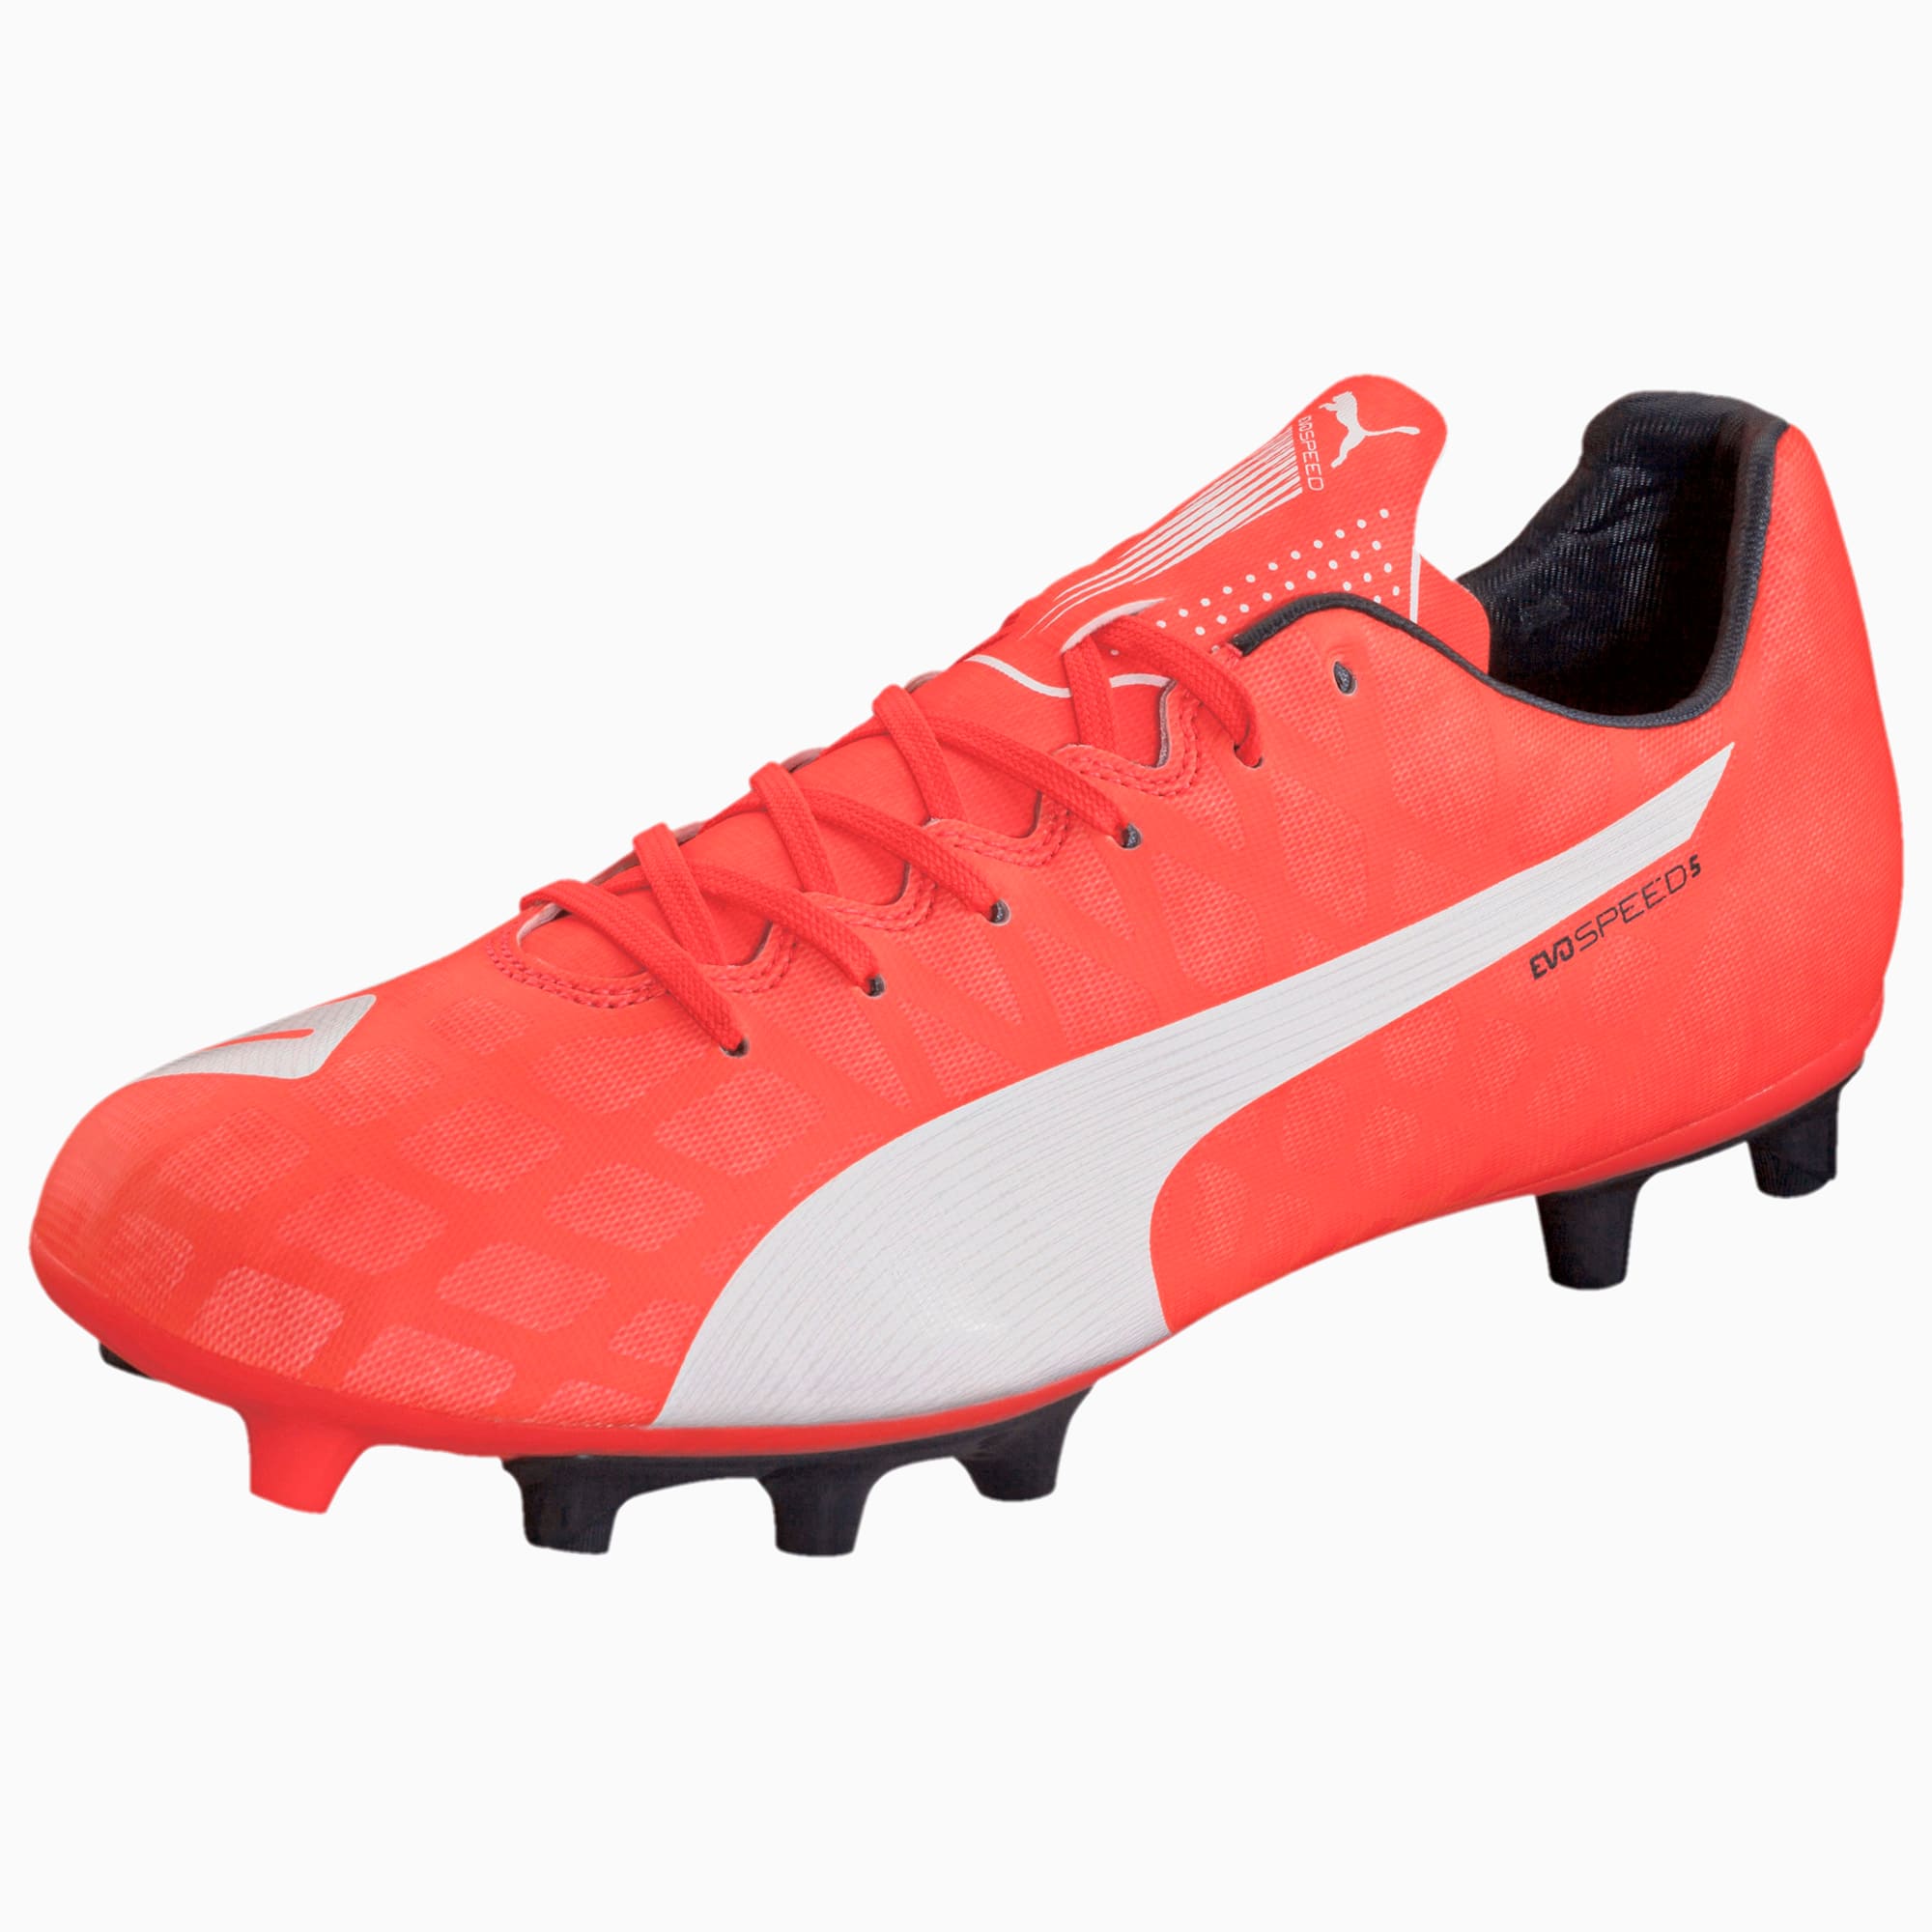 Evospeed 5 4 Fg Football Boots Puma Super Sale Puma